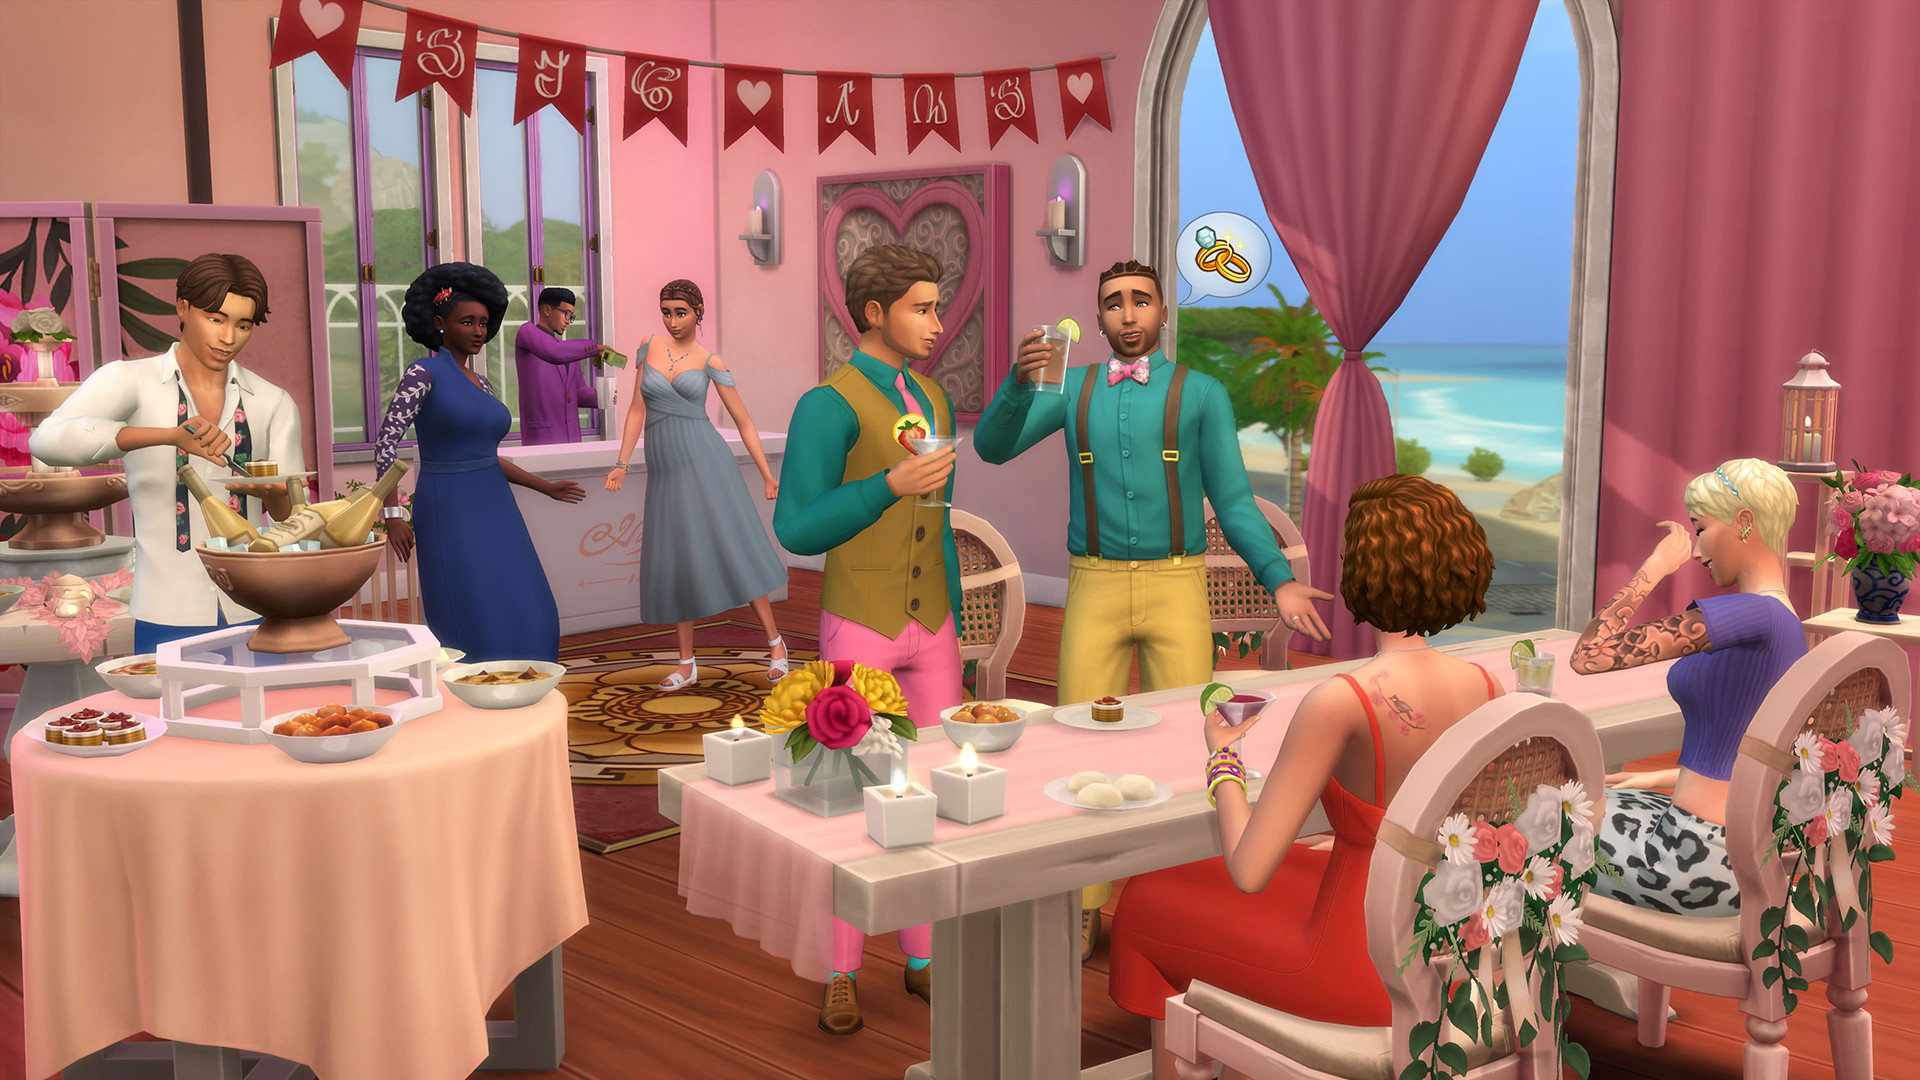 The Sims 4 - My Wedding Stories Game Pack DLC Origin CD Key $18.07